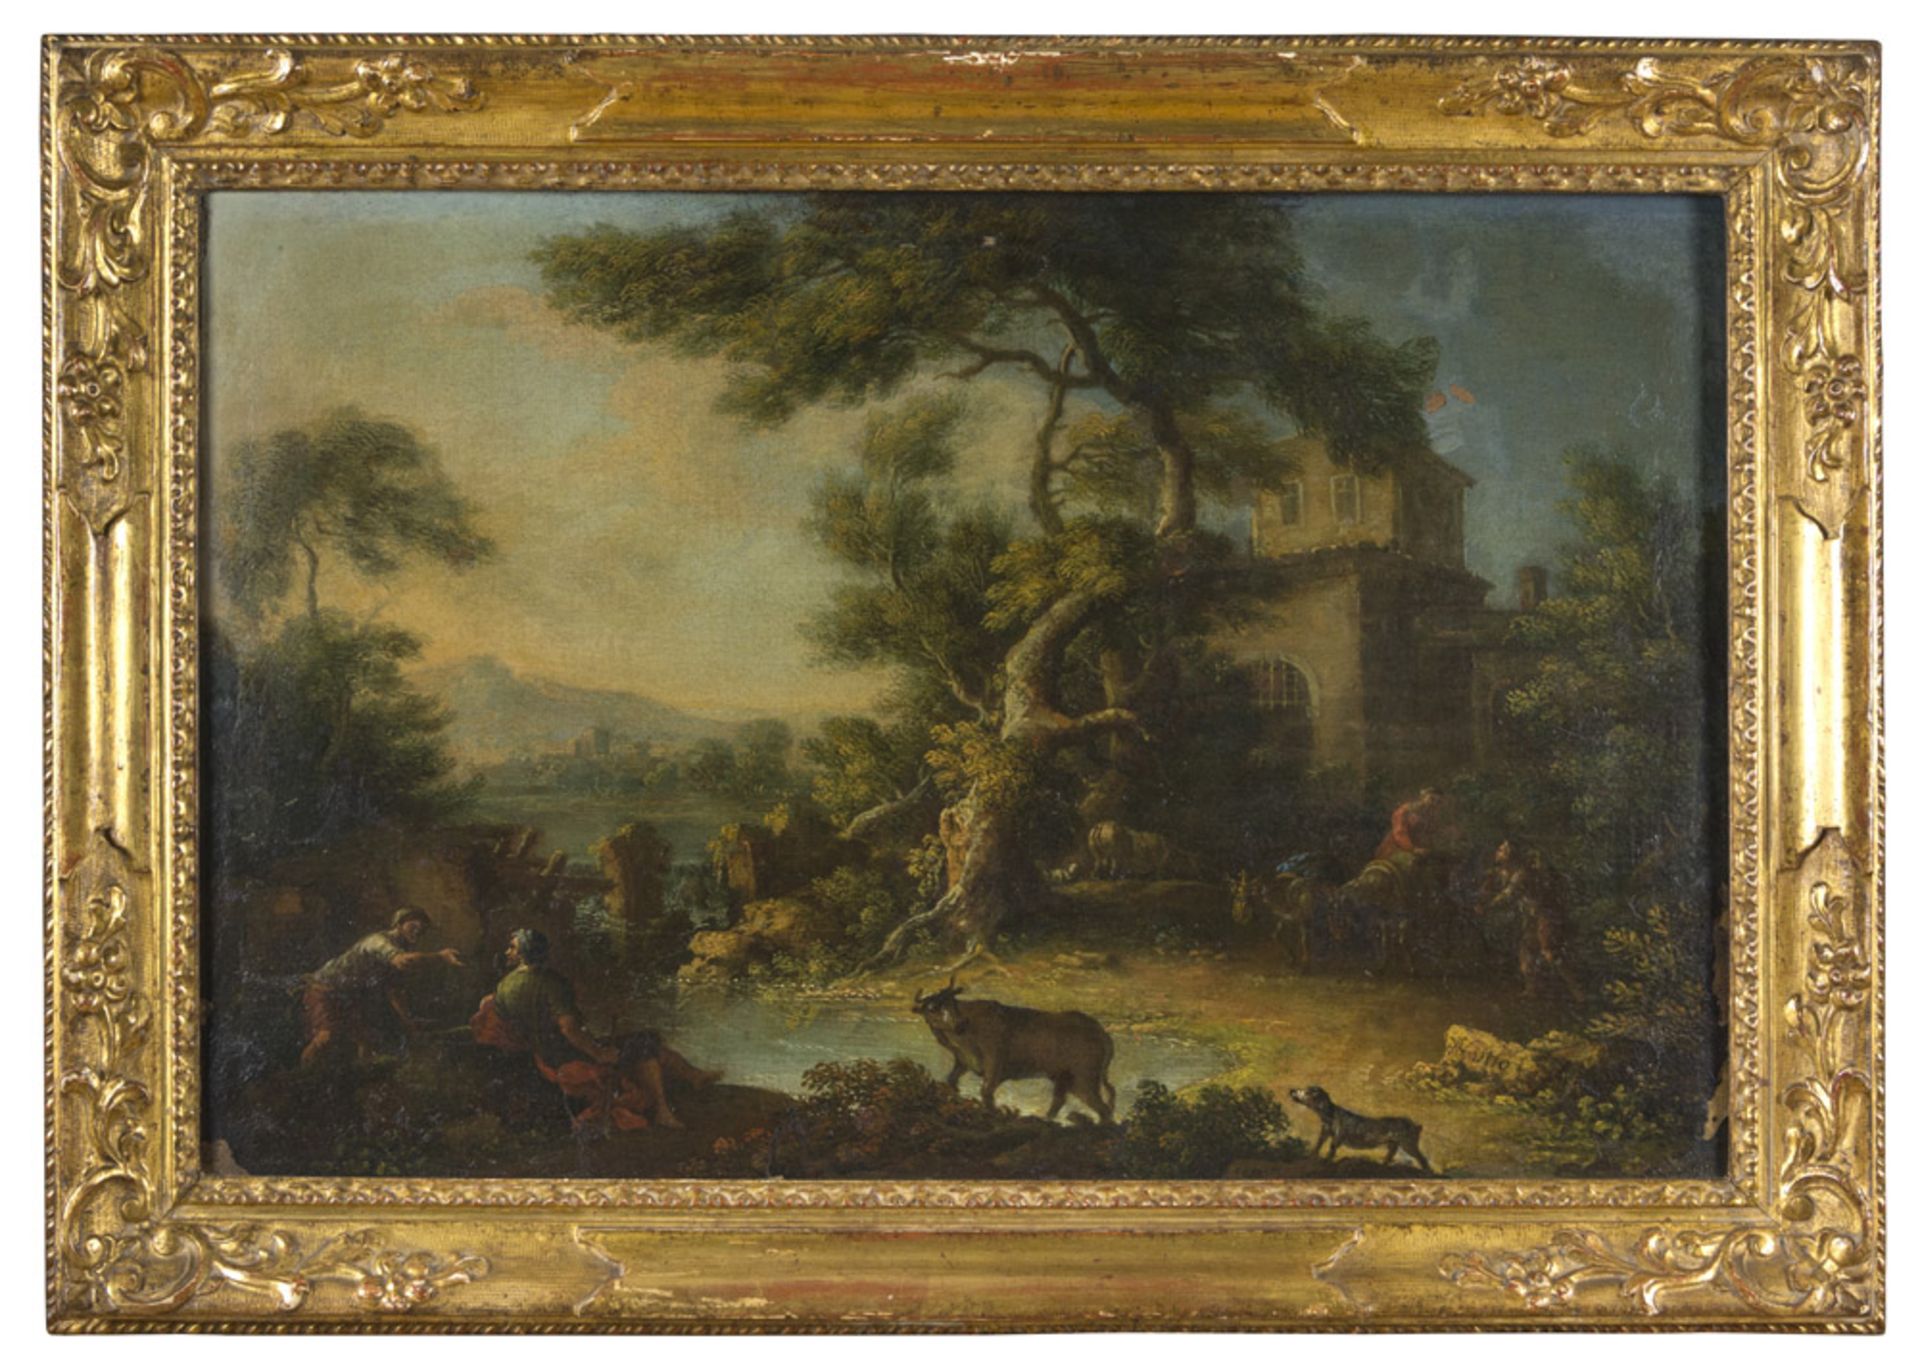 NICOLA VISO (Naples, 18th century) RIVER LANDSCAPE WITH WAYFARERS Oil on canvas, cm. 49 x 65